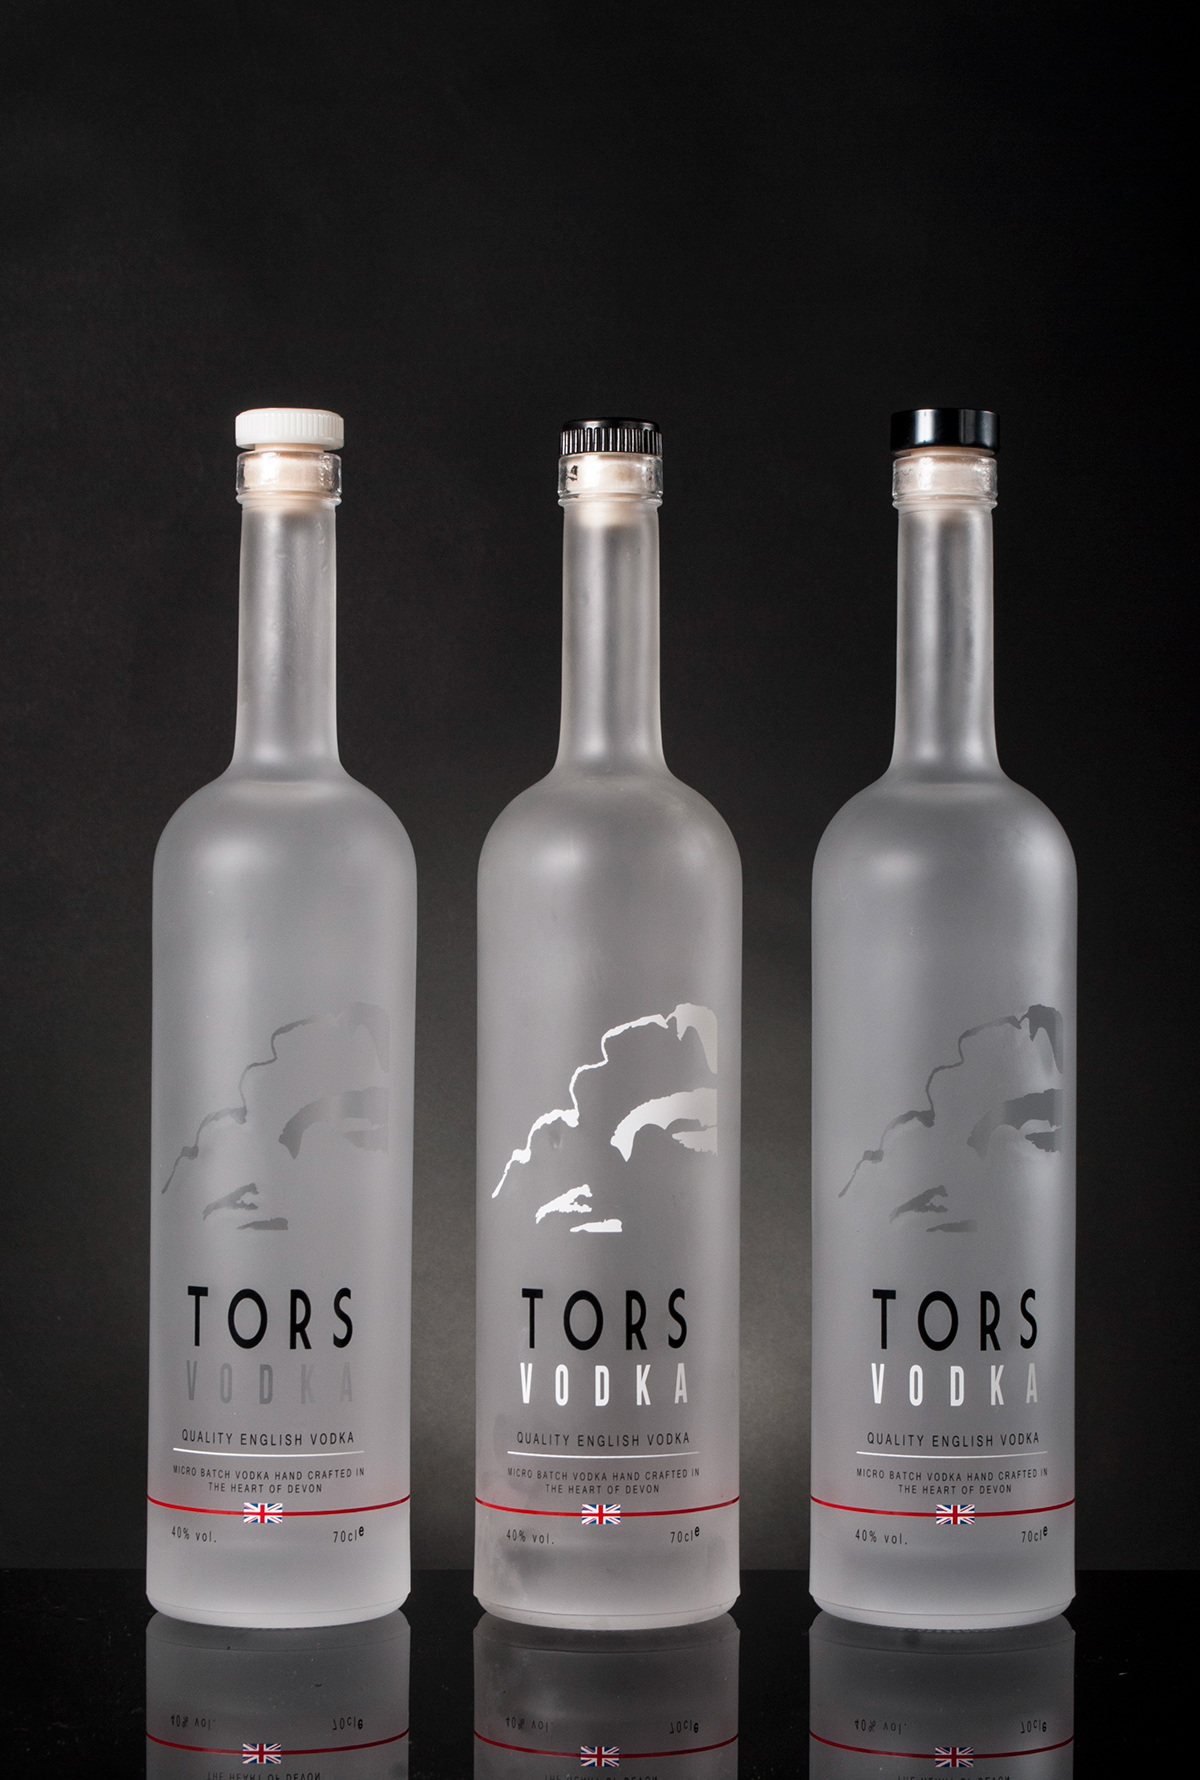 Adobe Portfolio Vodka bottle alcohol identity design Tors devon dartmoor england greygoose